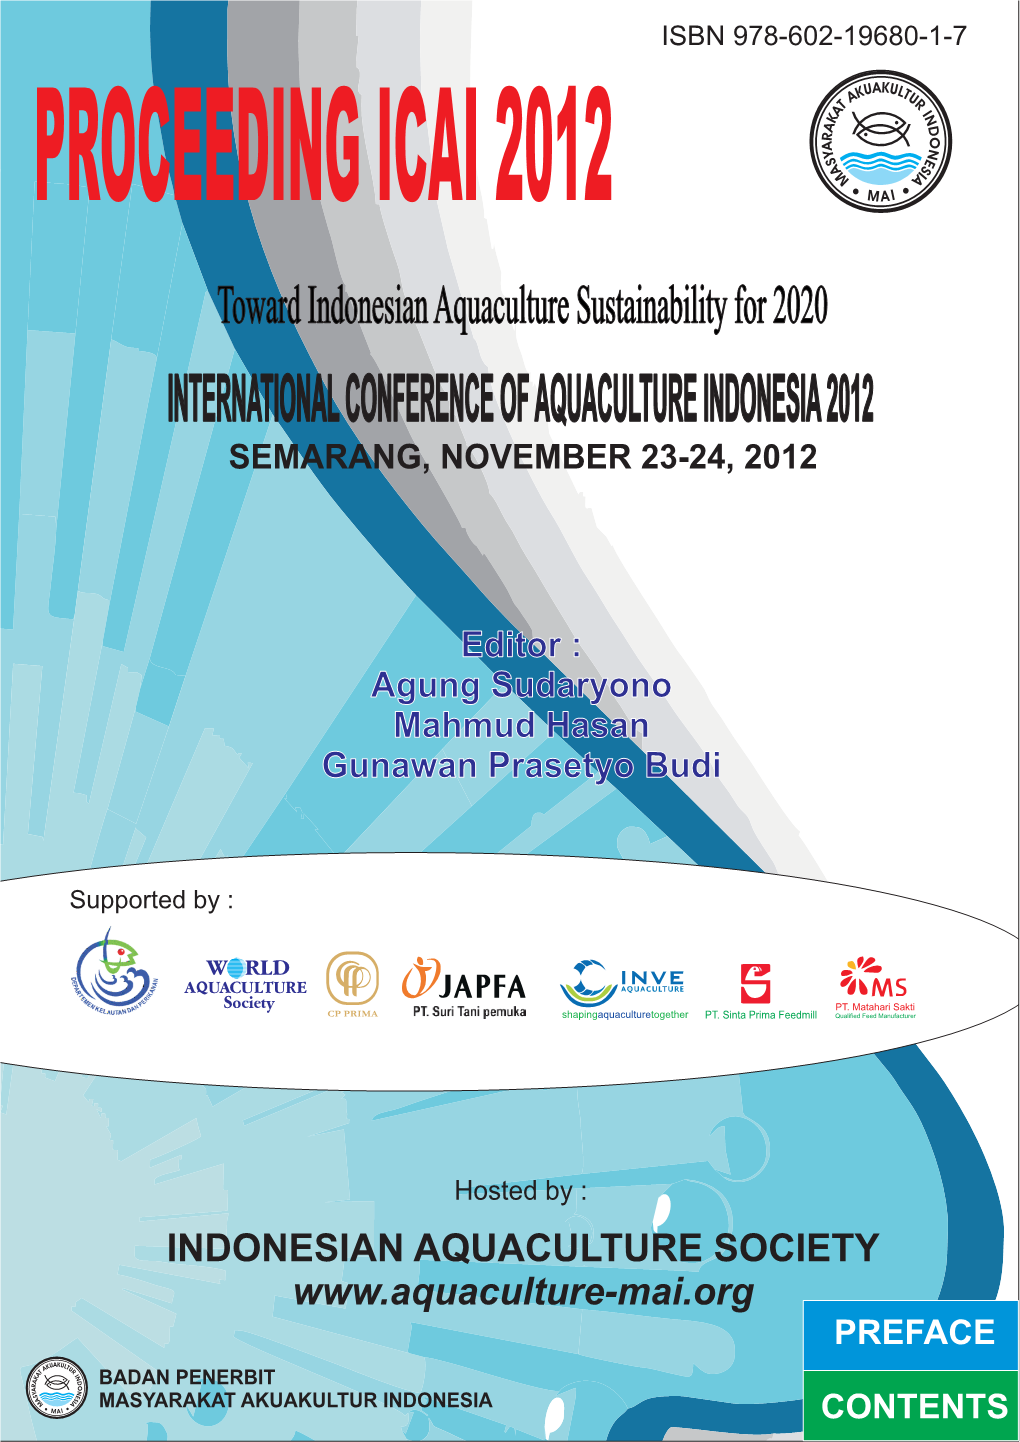 International Conference of Aquaculture Indonesia 2012 Semarang, November 23-24, 2012